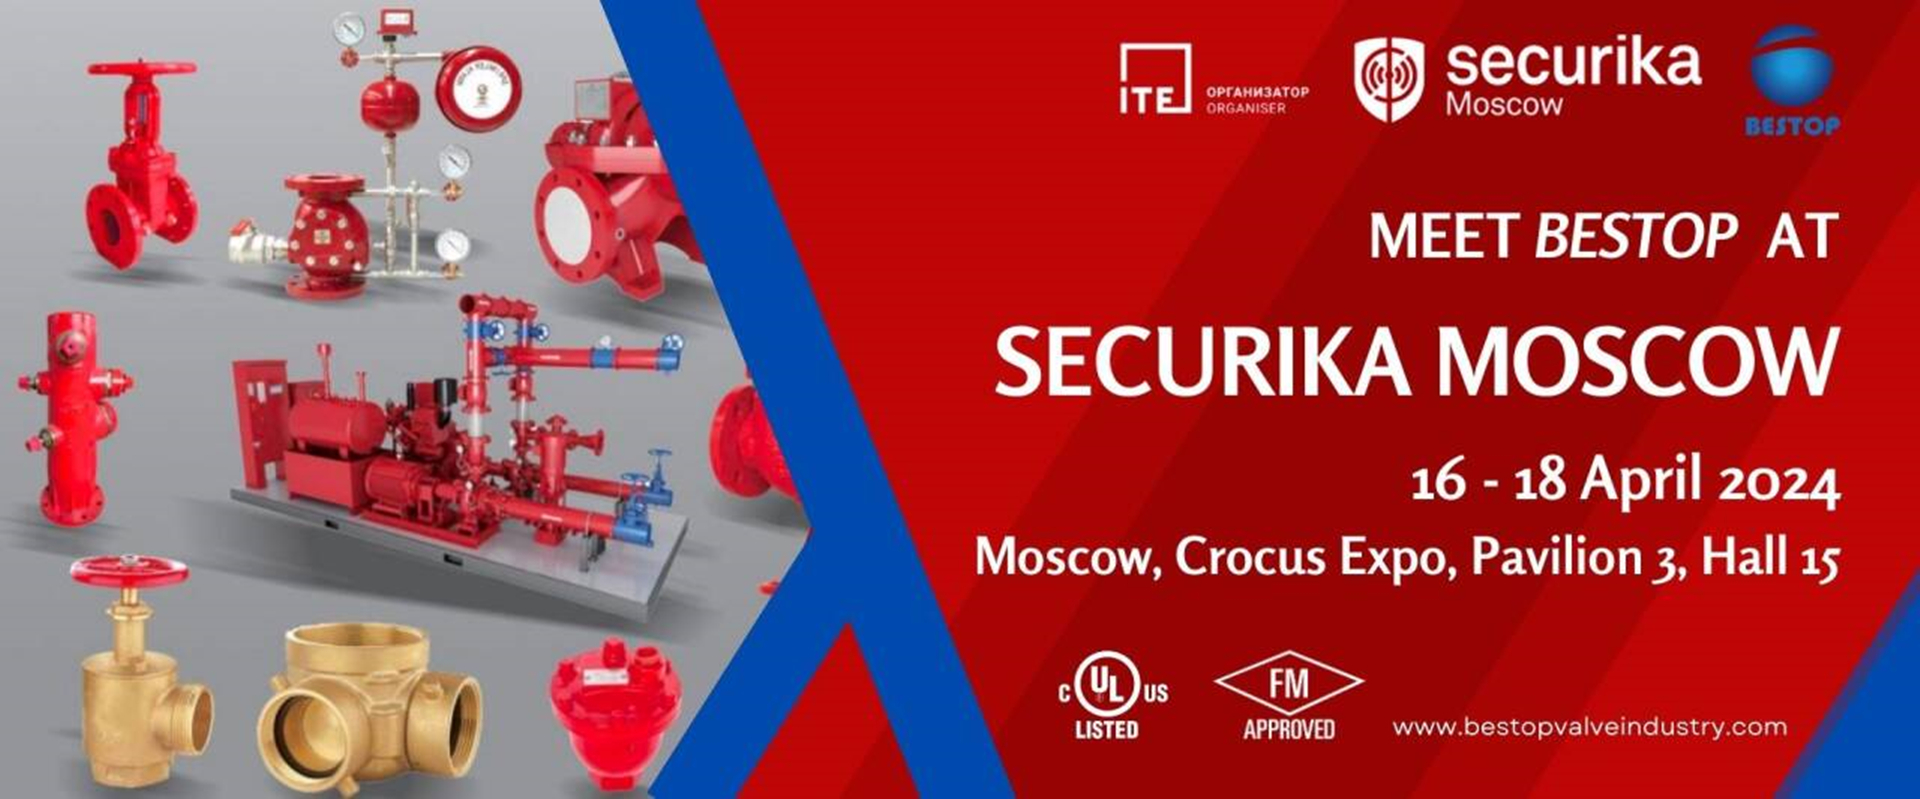 Securika Moscow(1)